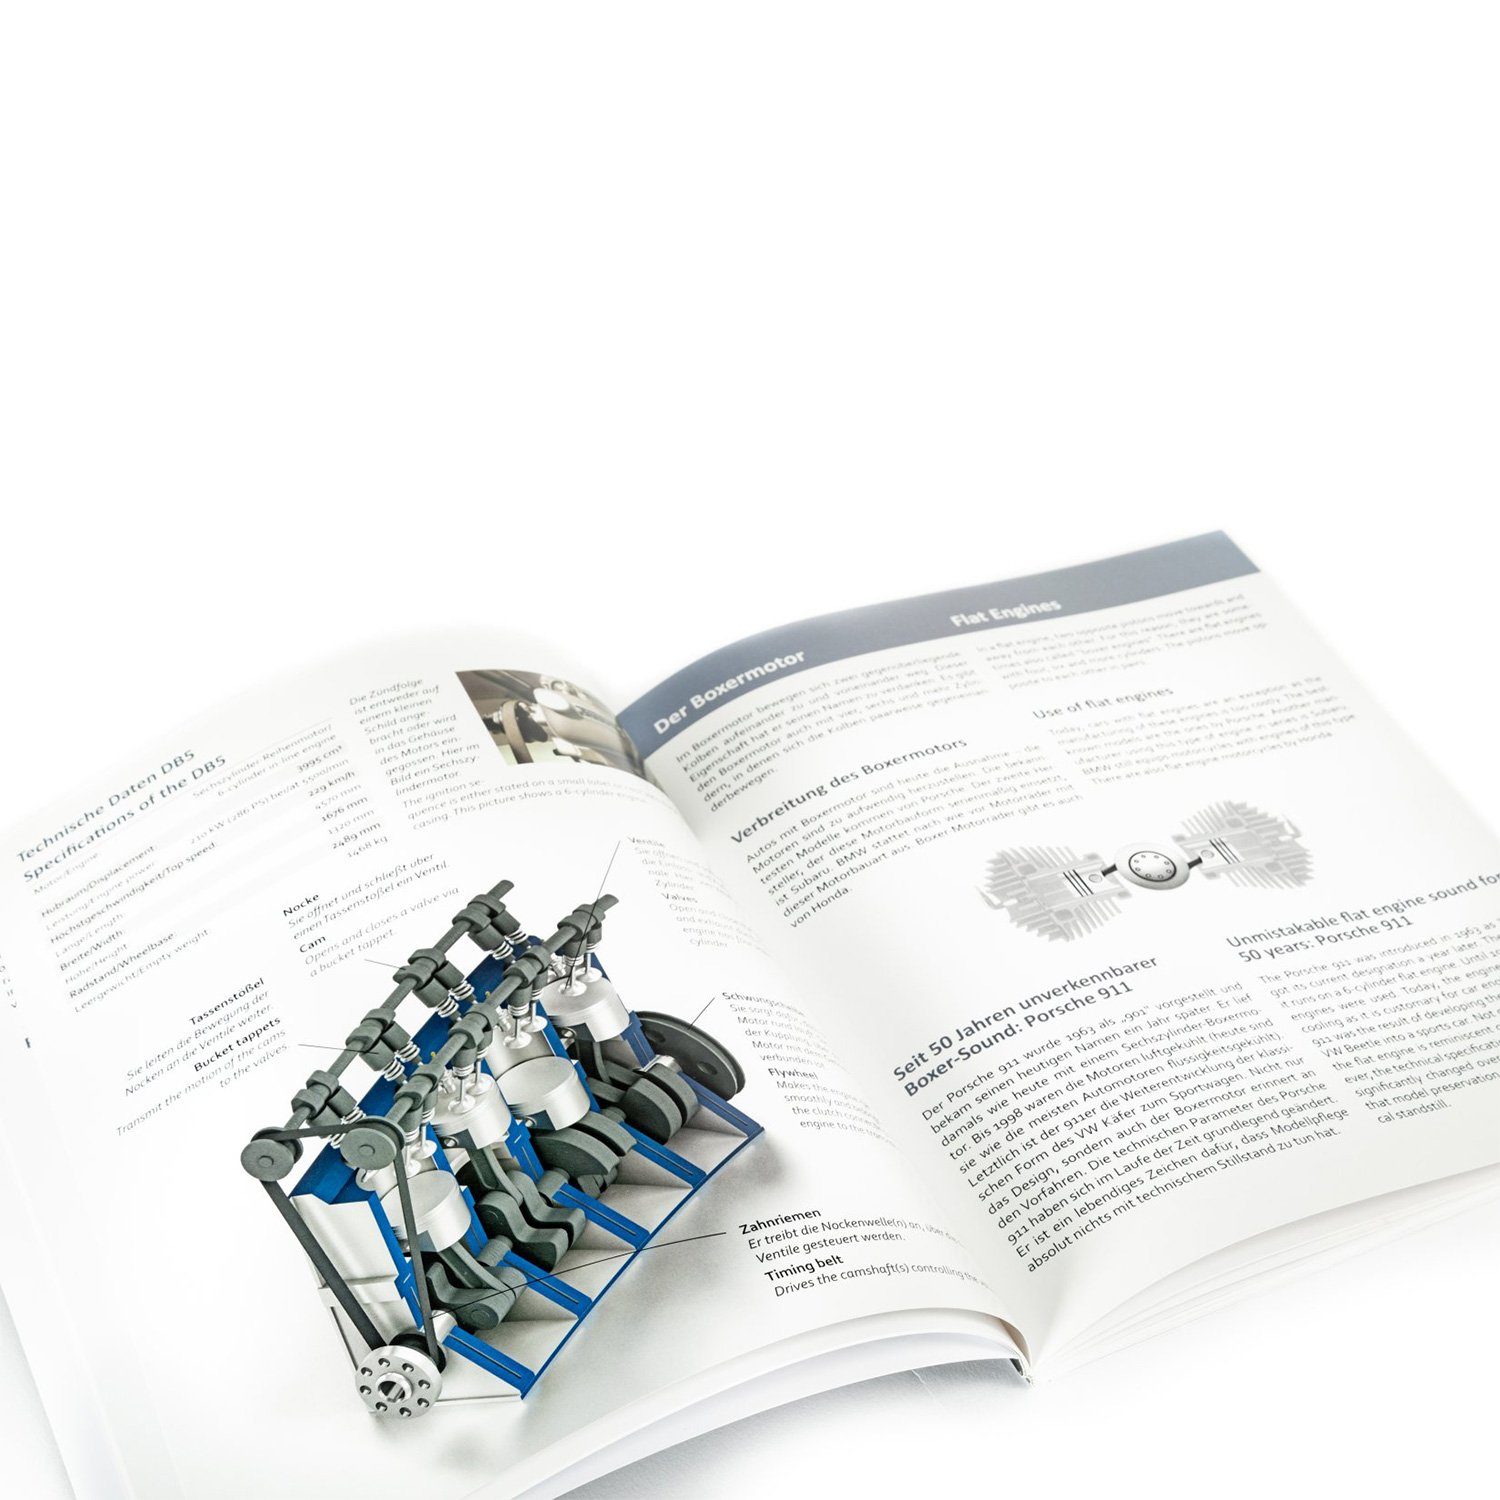 Original Bausatz 4-Zylinder-Motor, Anleitung, 1:3, Franzis 3D-Puzzle inkl. Puzzleteile Motor-Sound, 100-Teile,